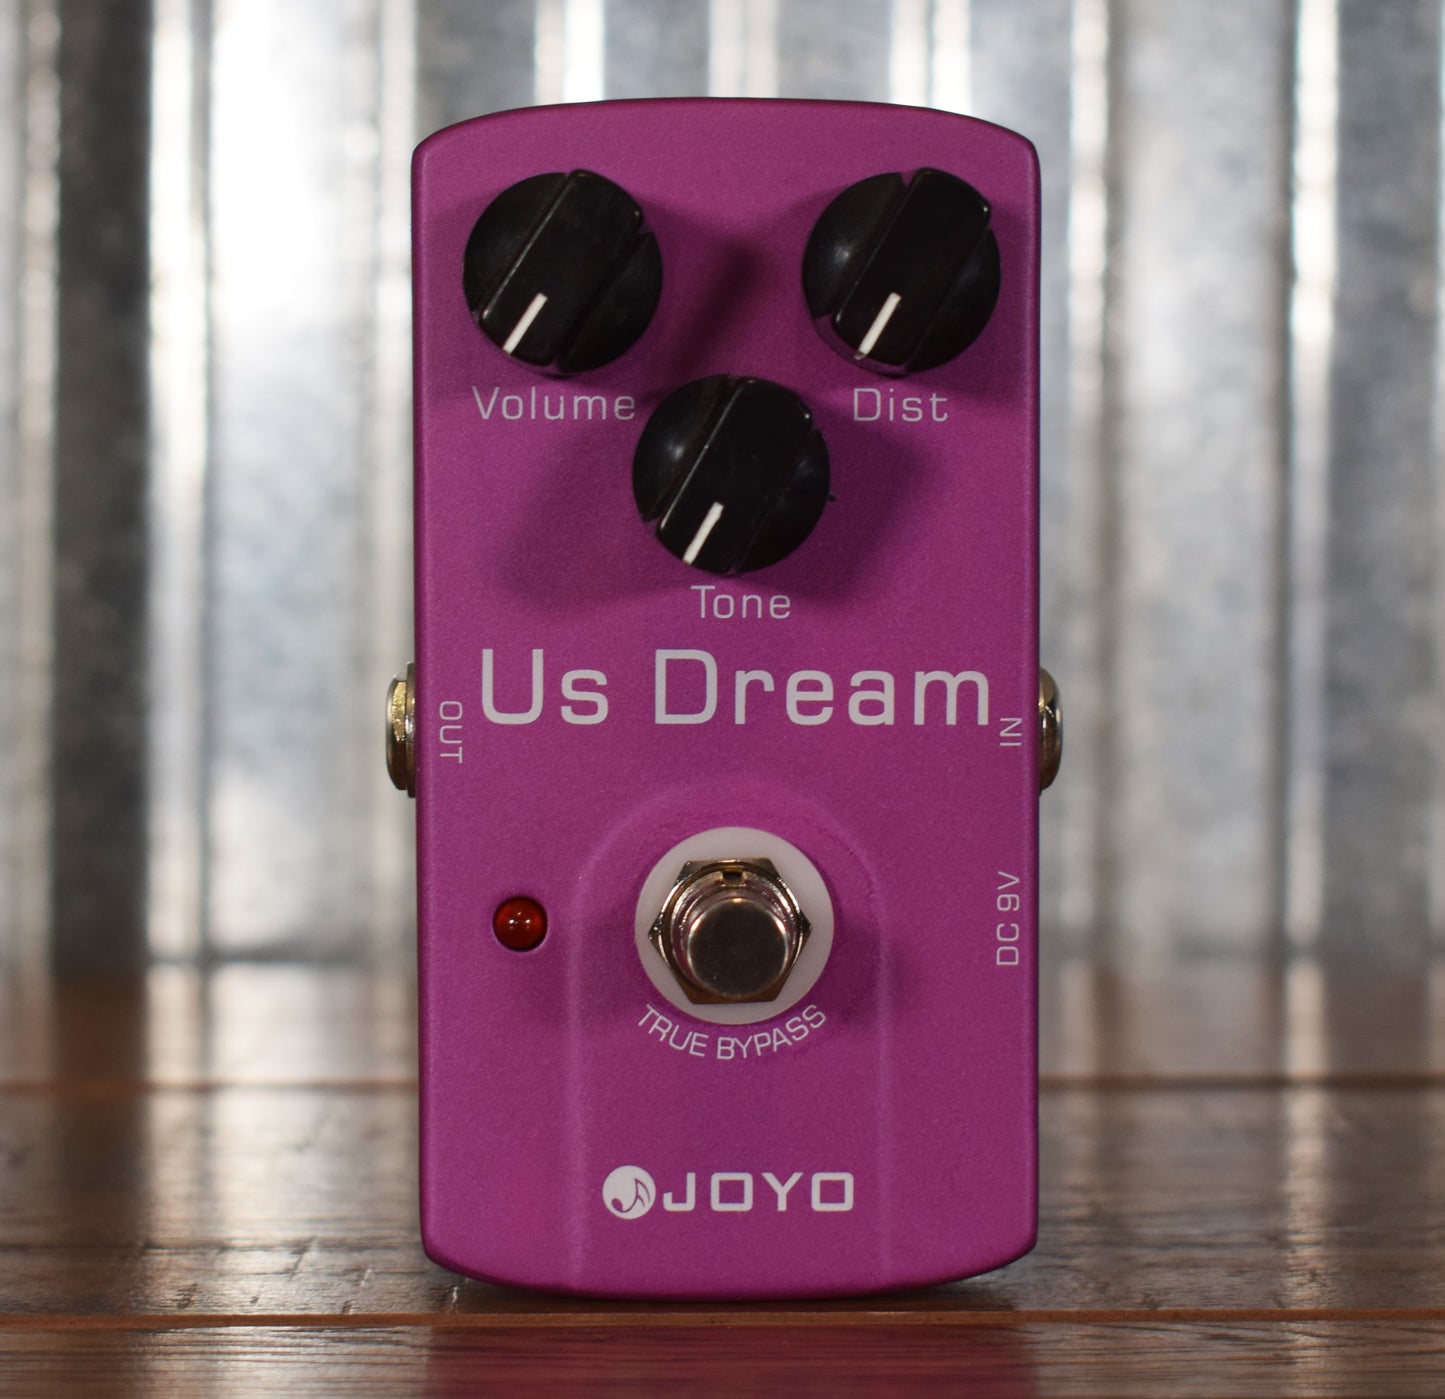 JOYO JF-34 US Dream Distortion Guitar Effect Pedal Demo